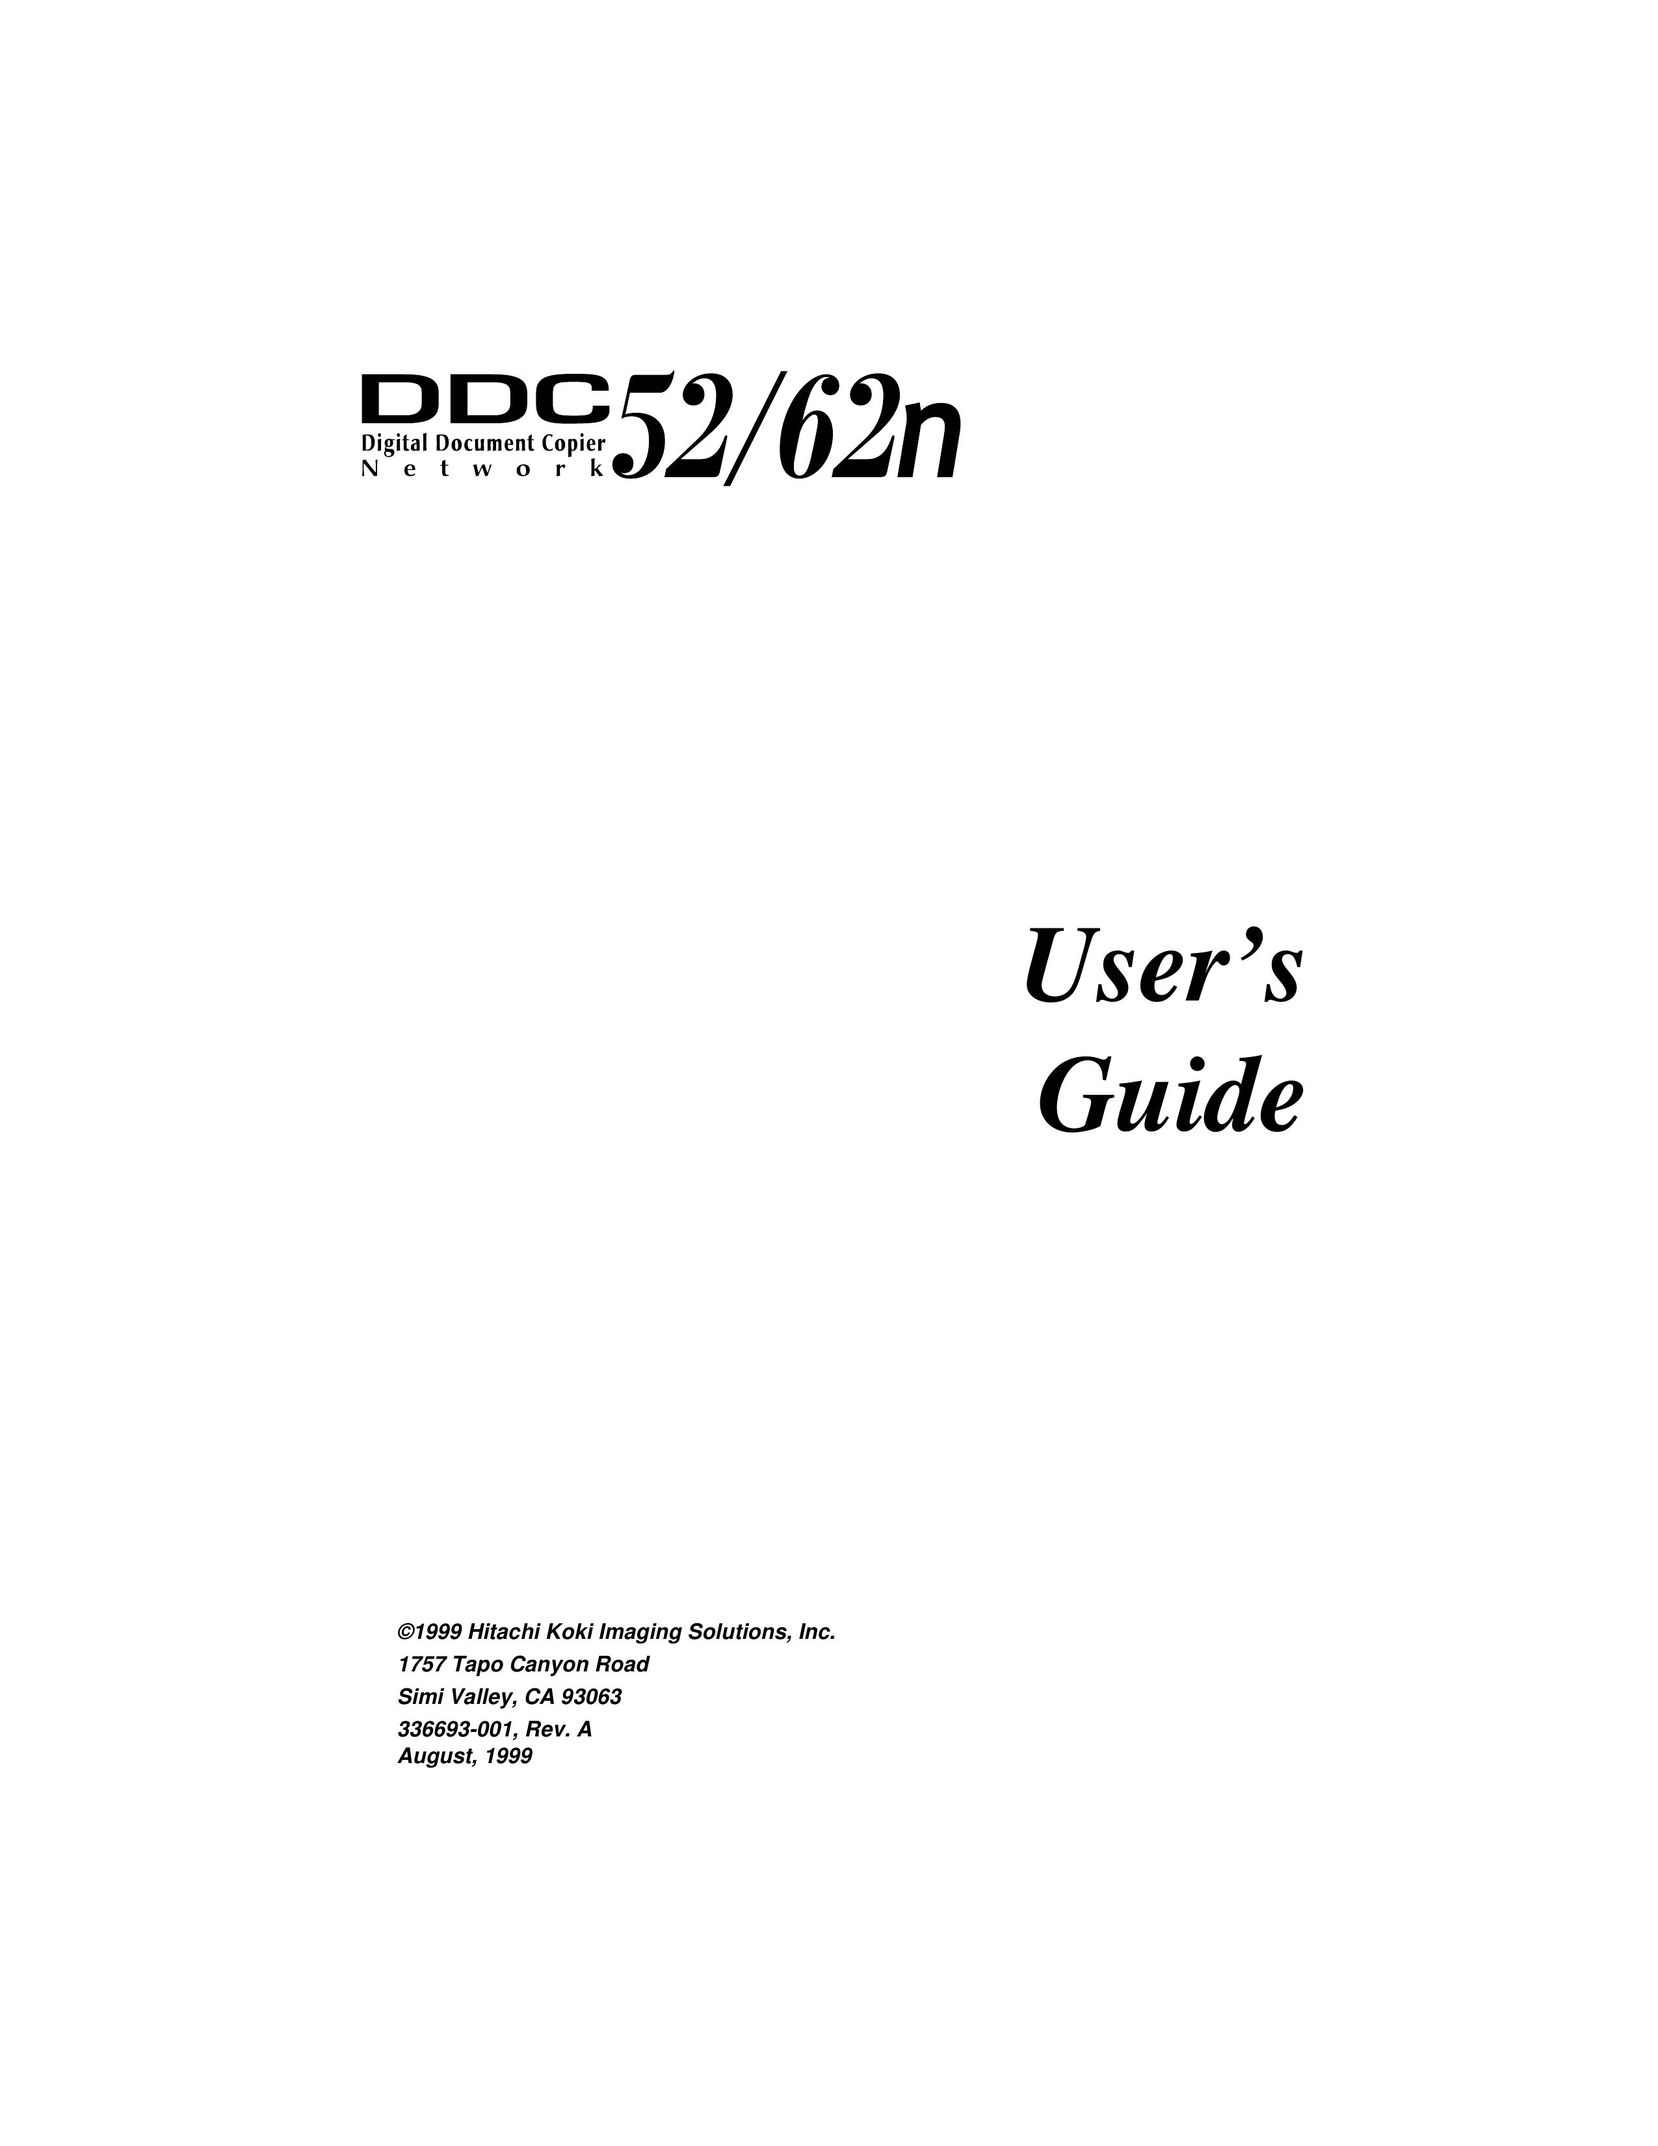 Hitachi Koki USA DDC 52N Copier User Manual